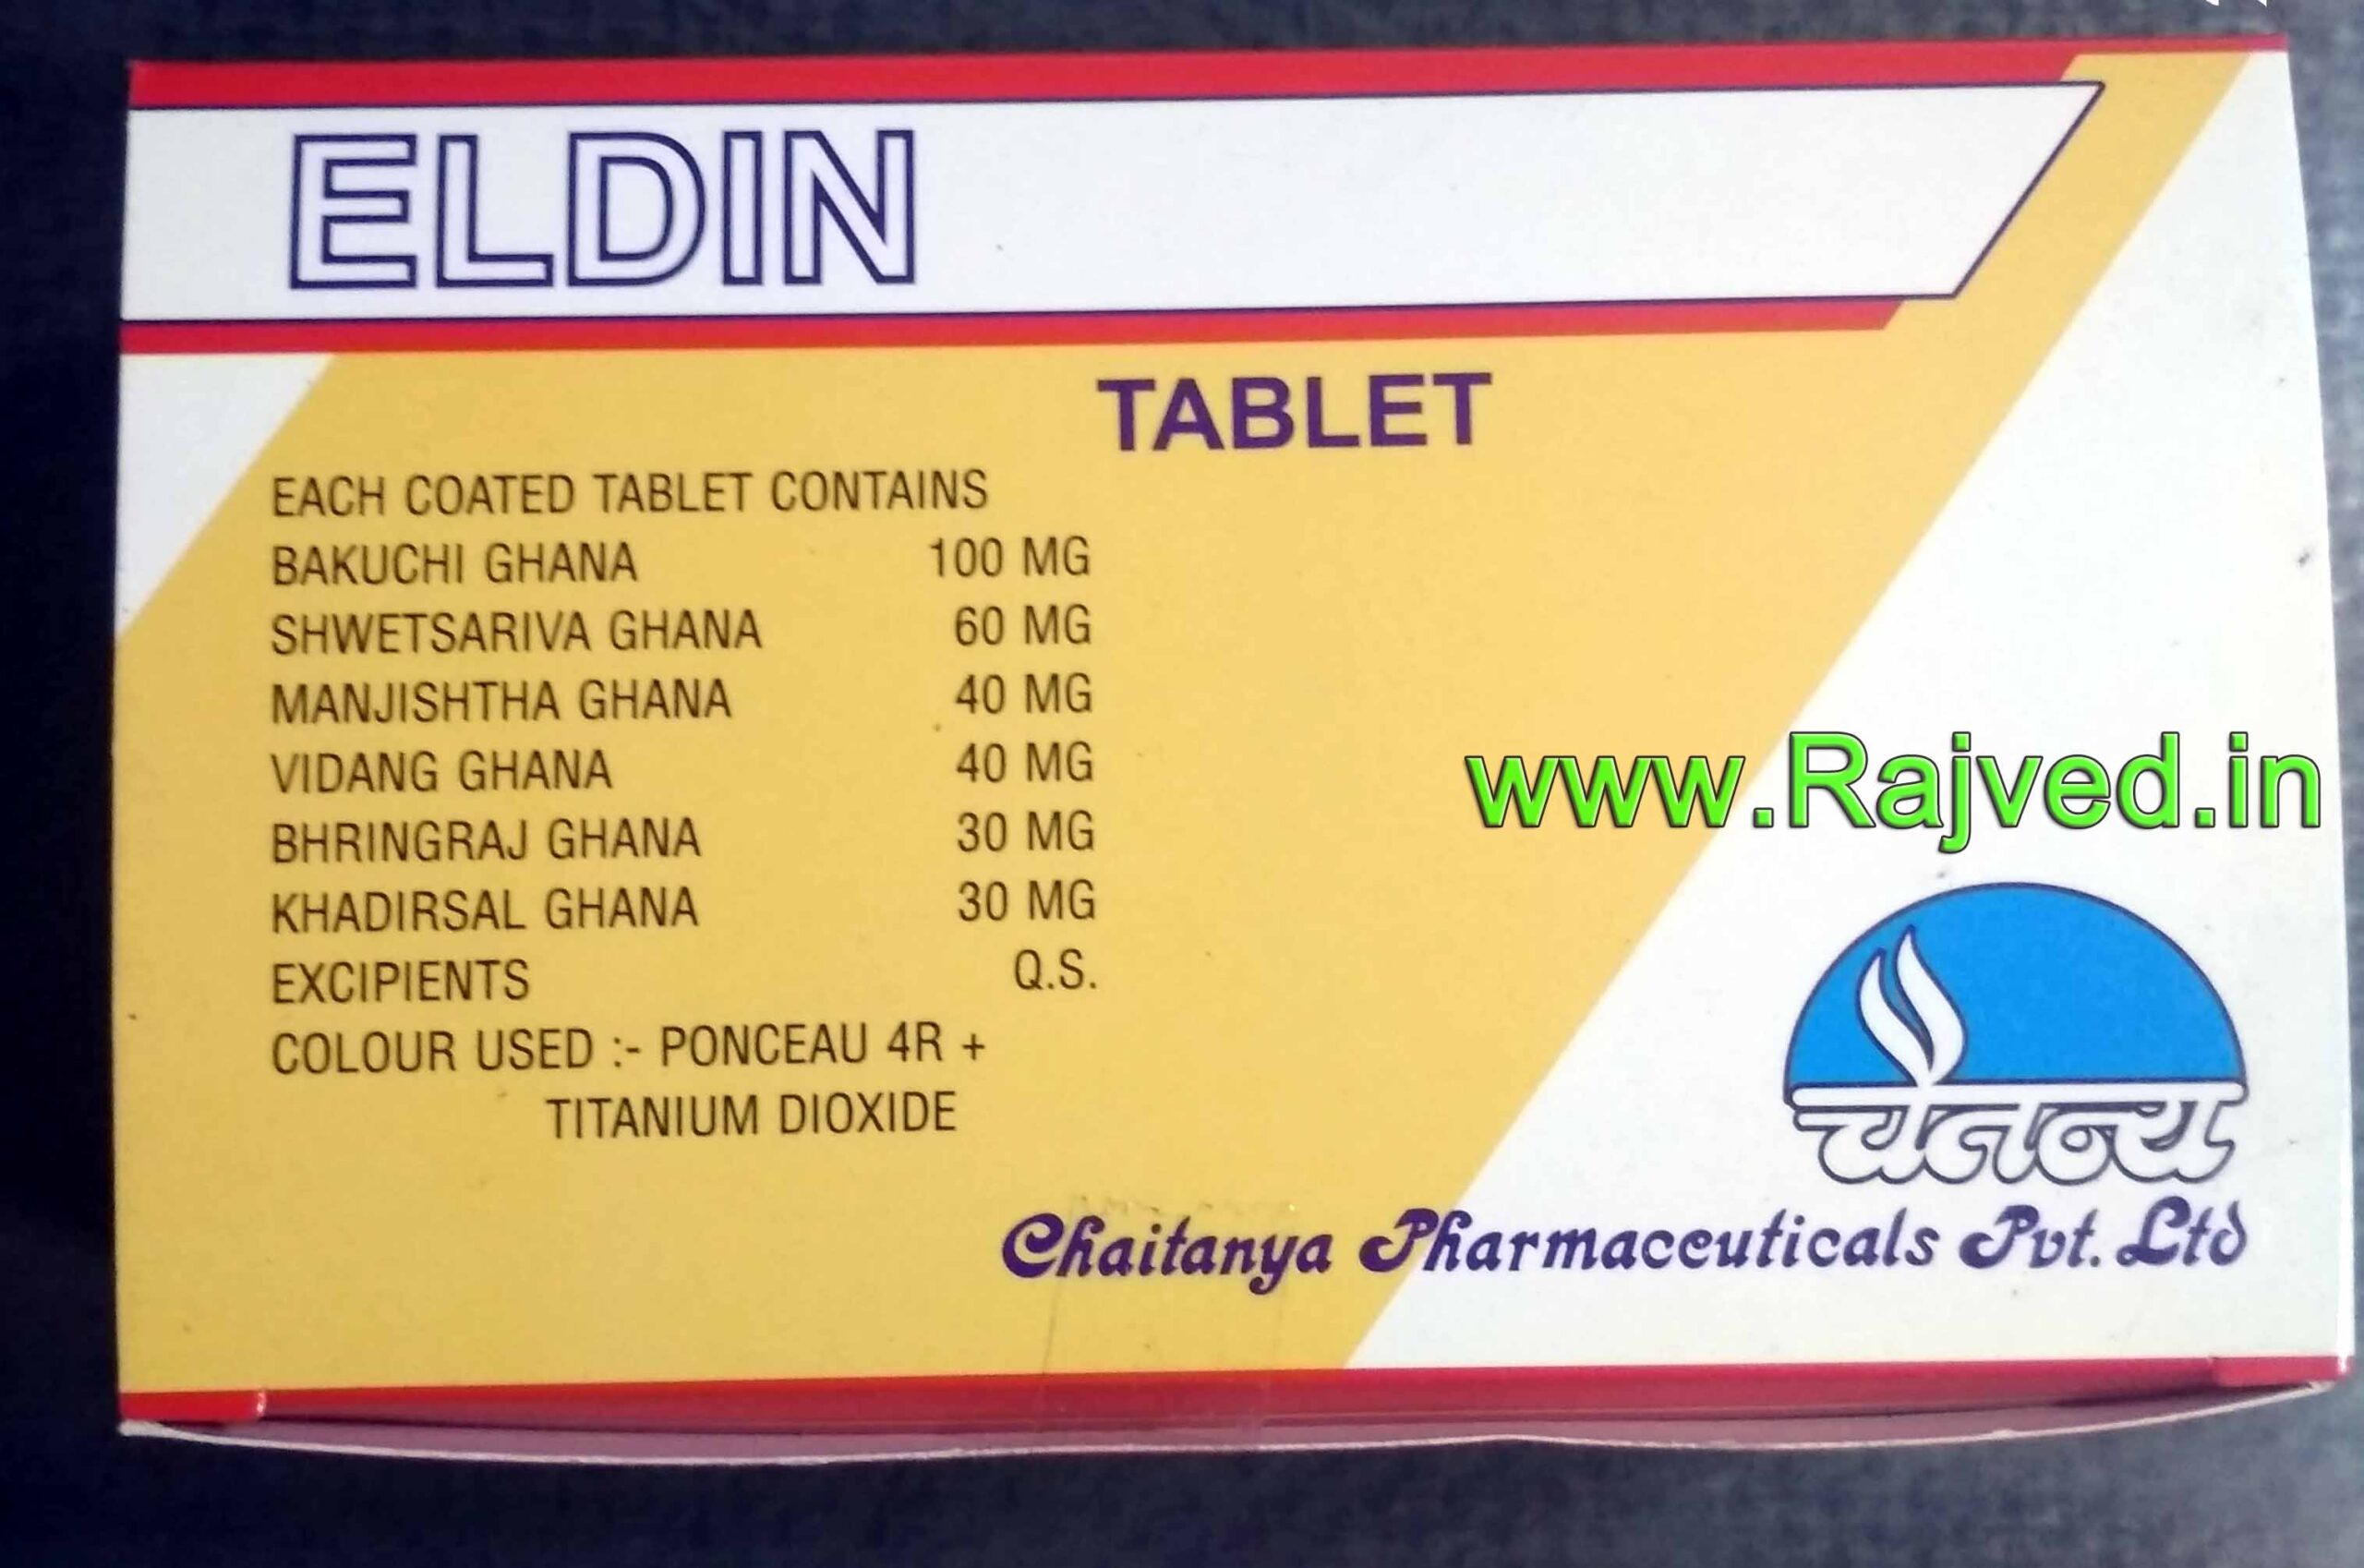 eldin 15tab upto 20% off Chaitanya Pharmaceuticals